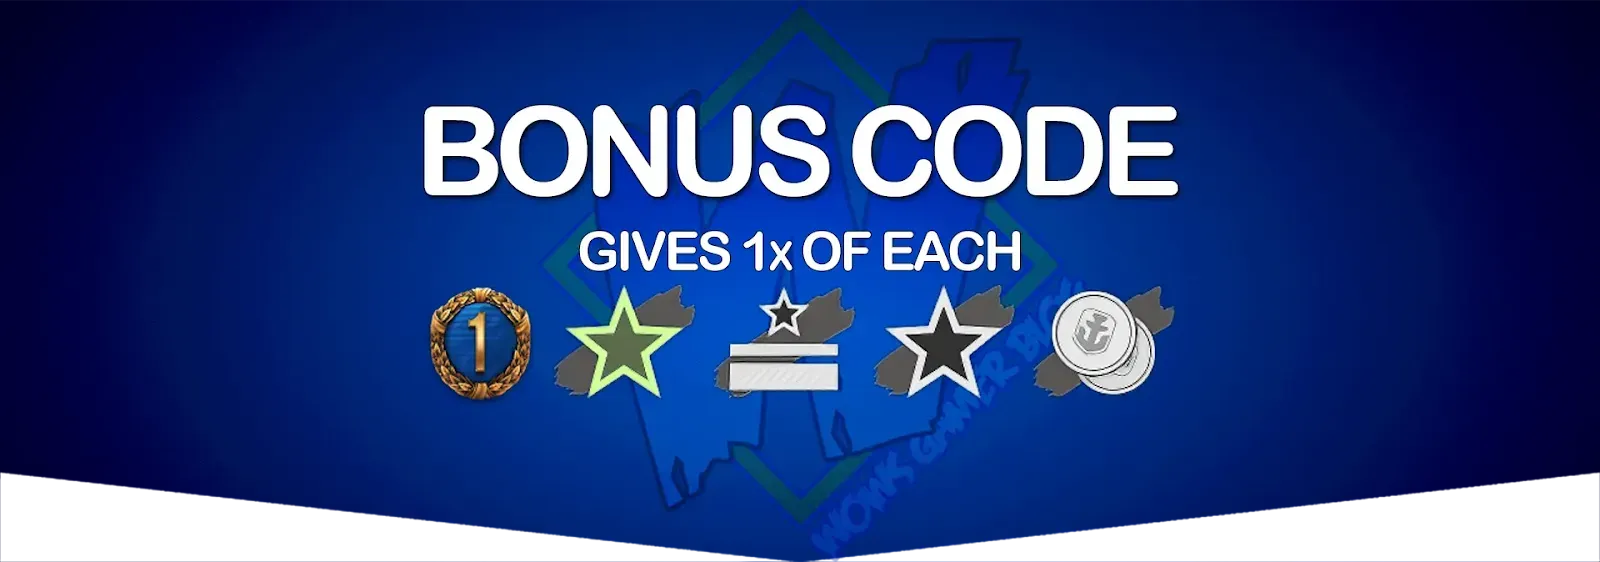 bonus-code-may6-image